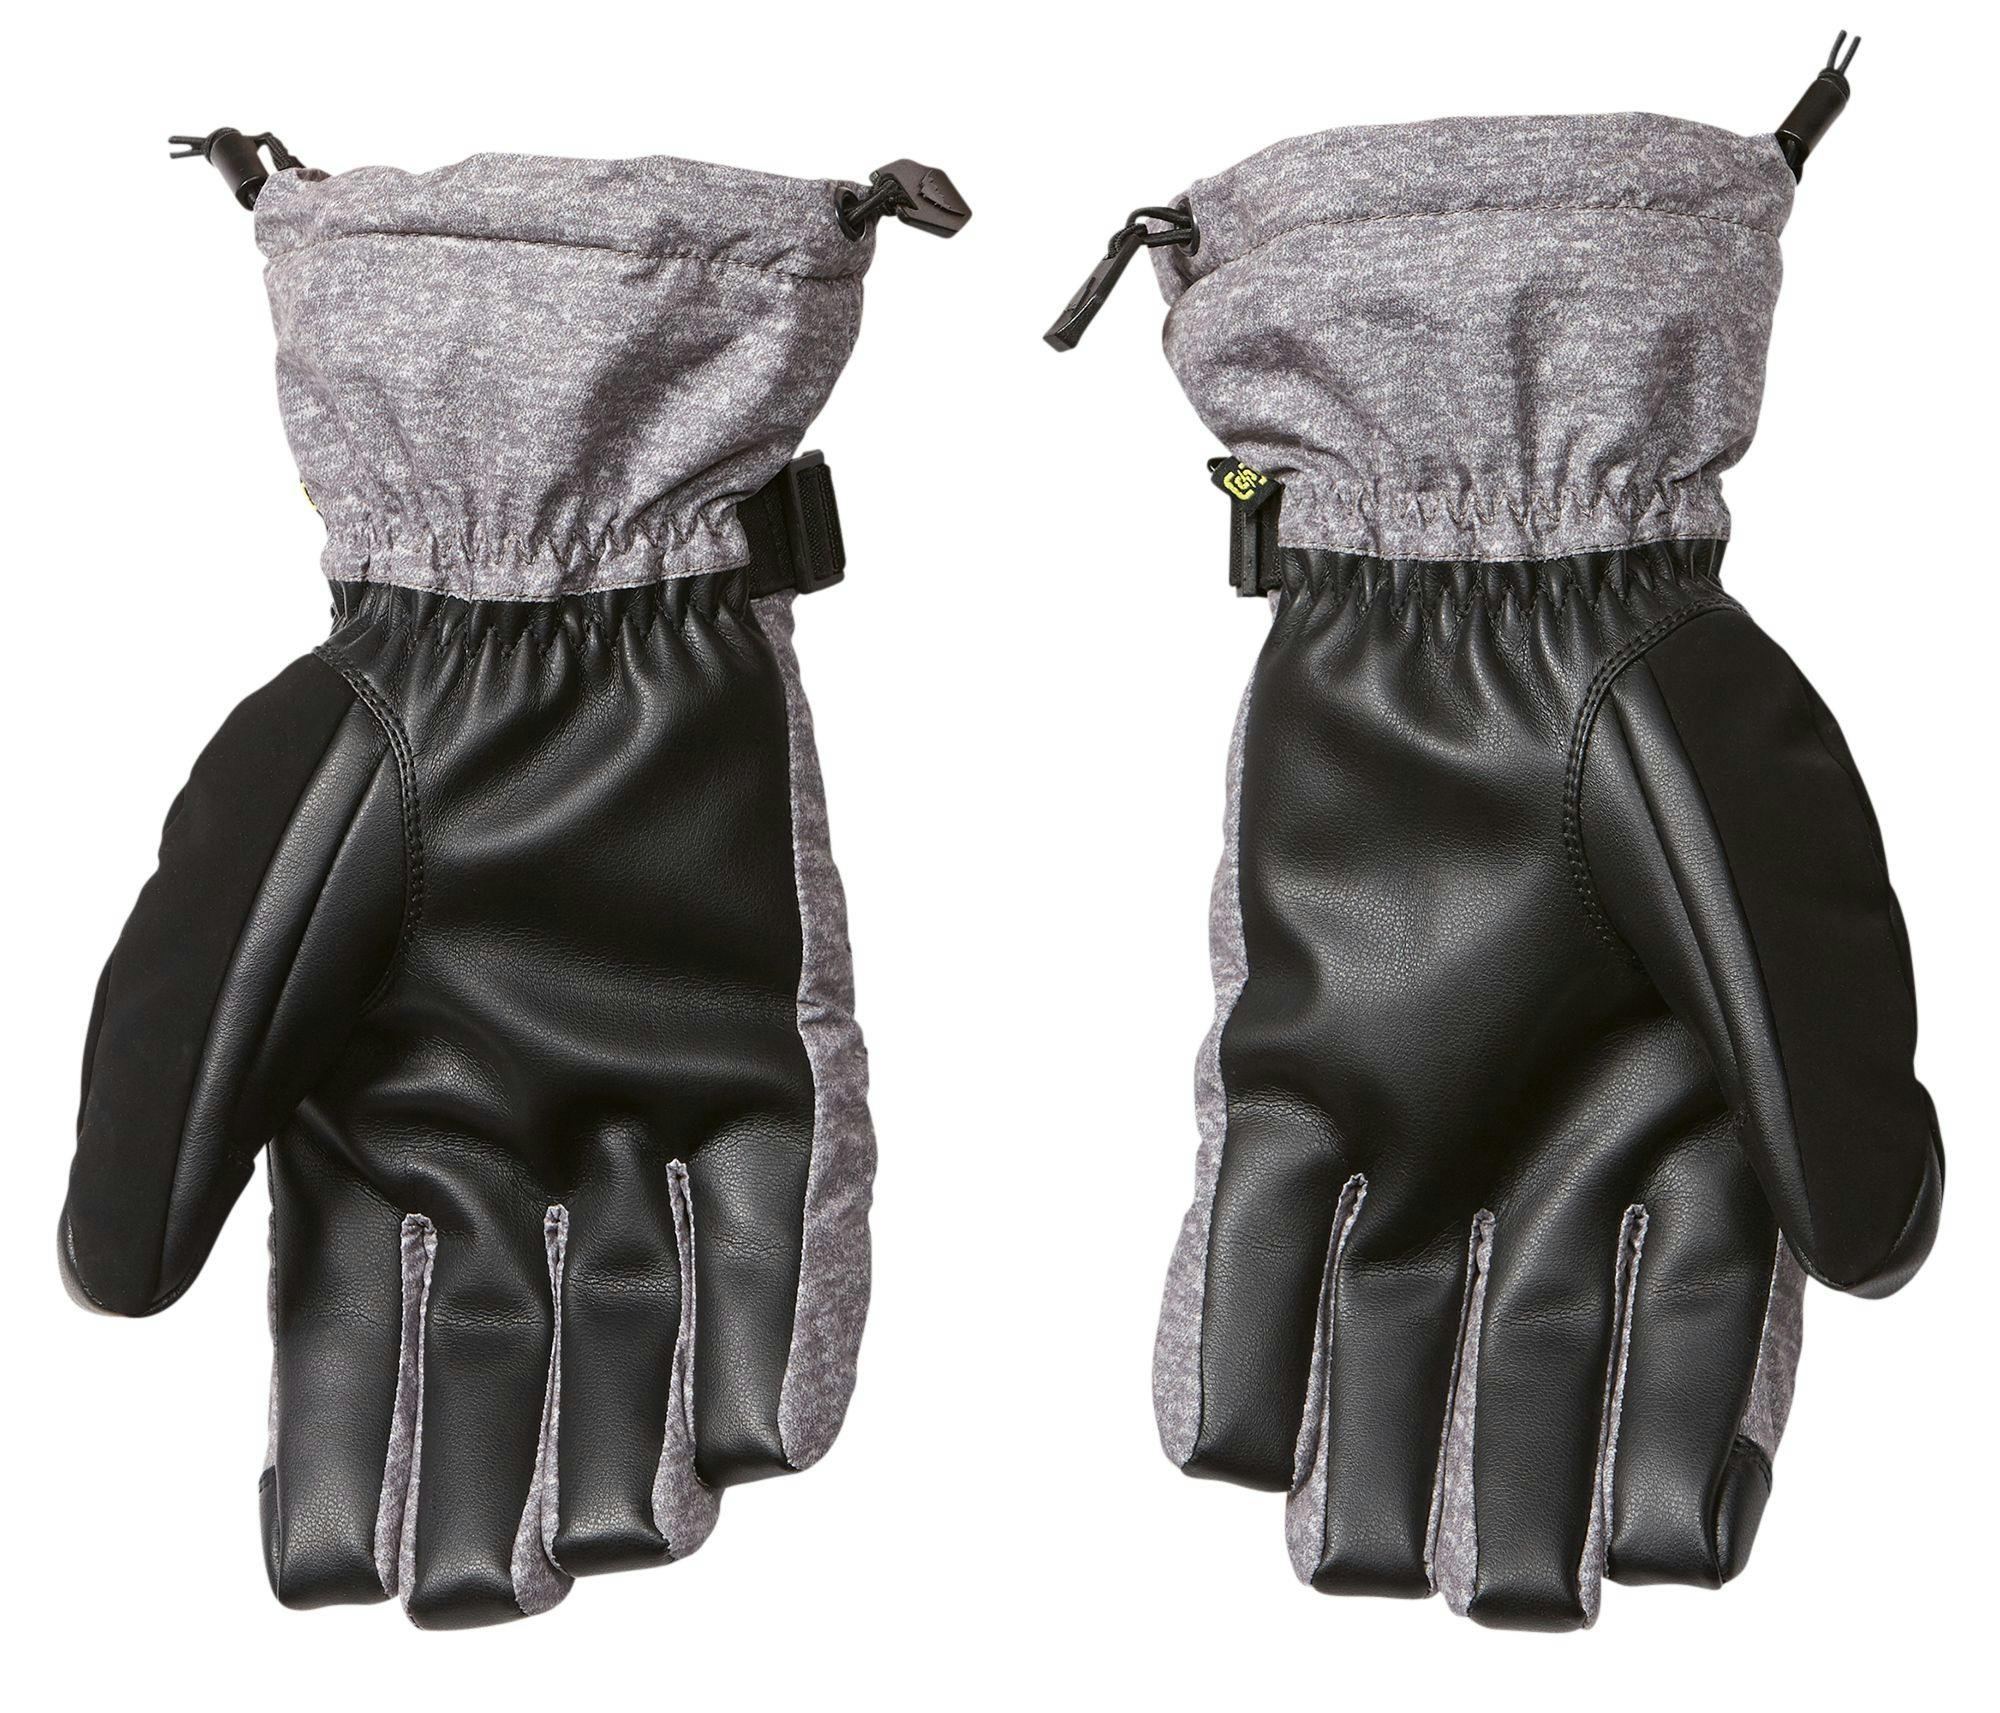 Burton Men's Profile Gloves